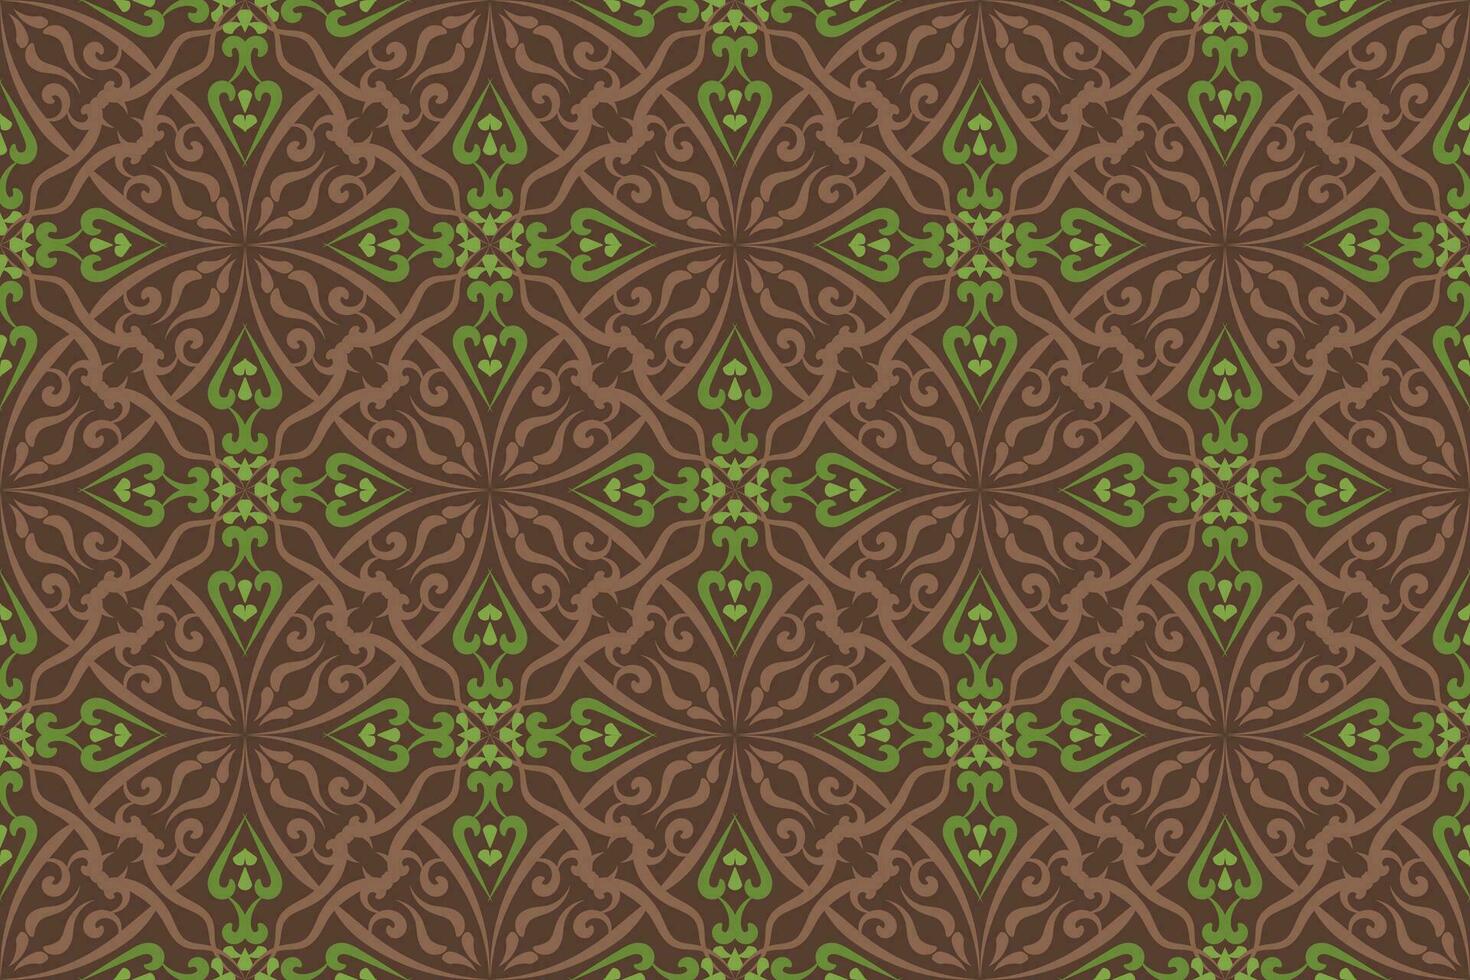 Spanish tile pattern vector seamless with floral ornaments. Portuguese azulejos ceramic, mexican talavera, italian sicily majolica design. Texture for kitchen wallpaper or bathroom flooring.